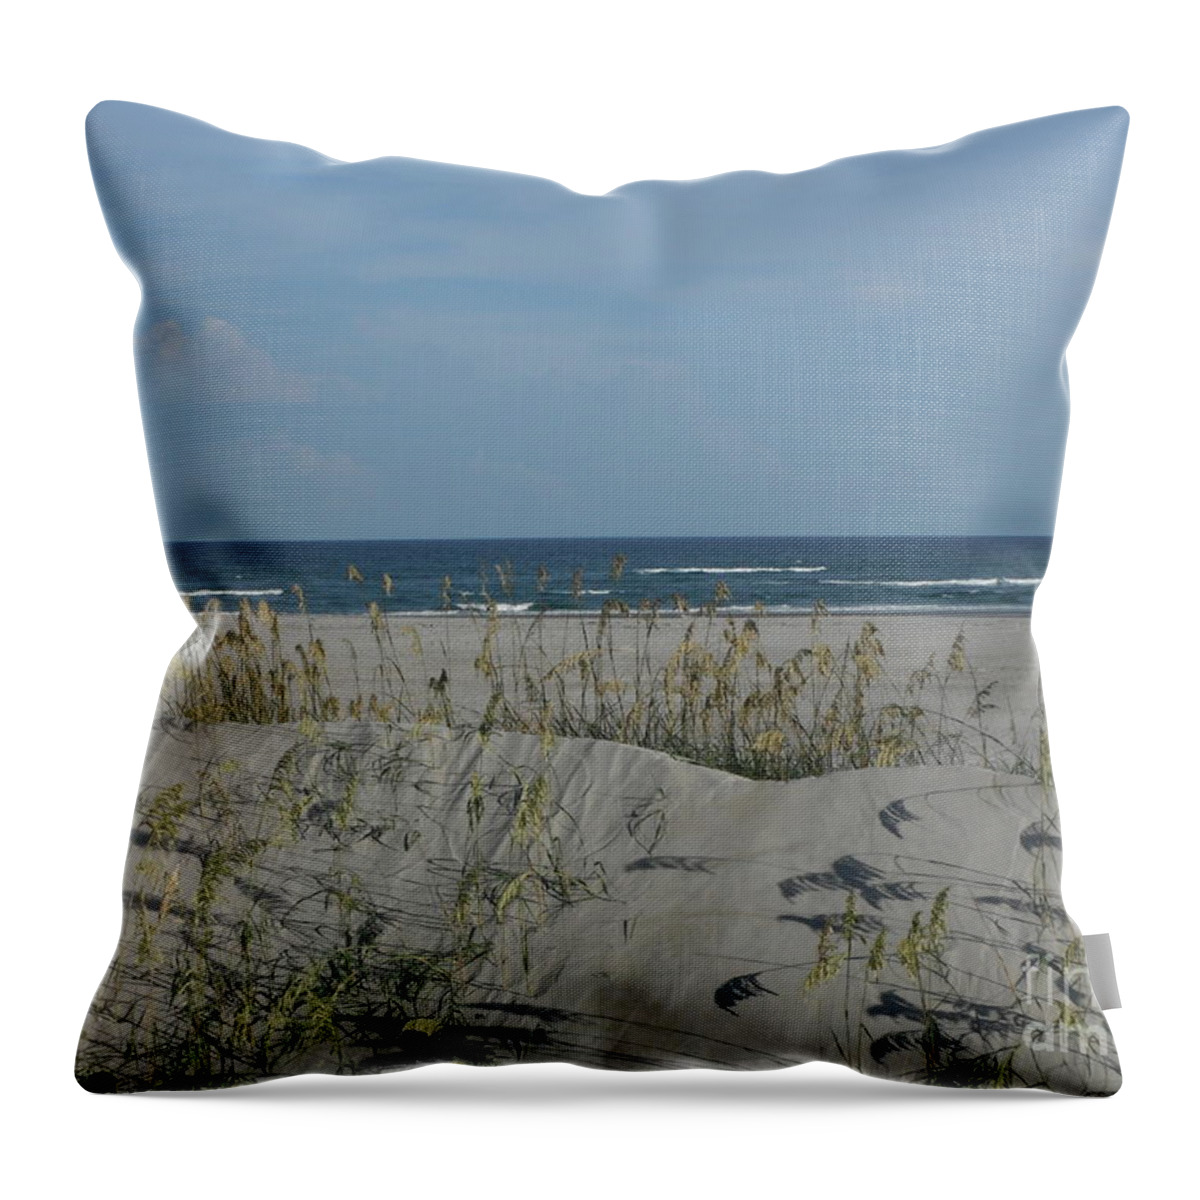 North Carolina Dune Throw Pillow featuring the photograph North Carolina Dune by Paddy Shaffer